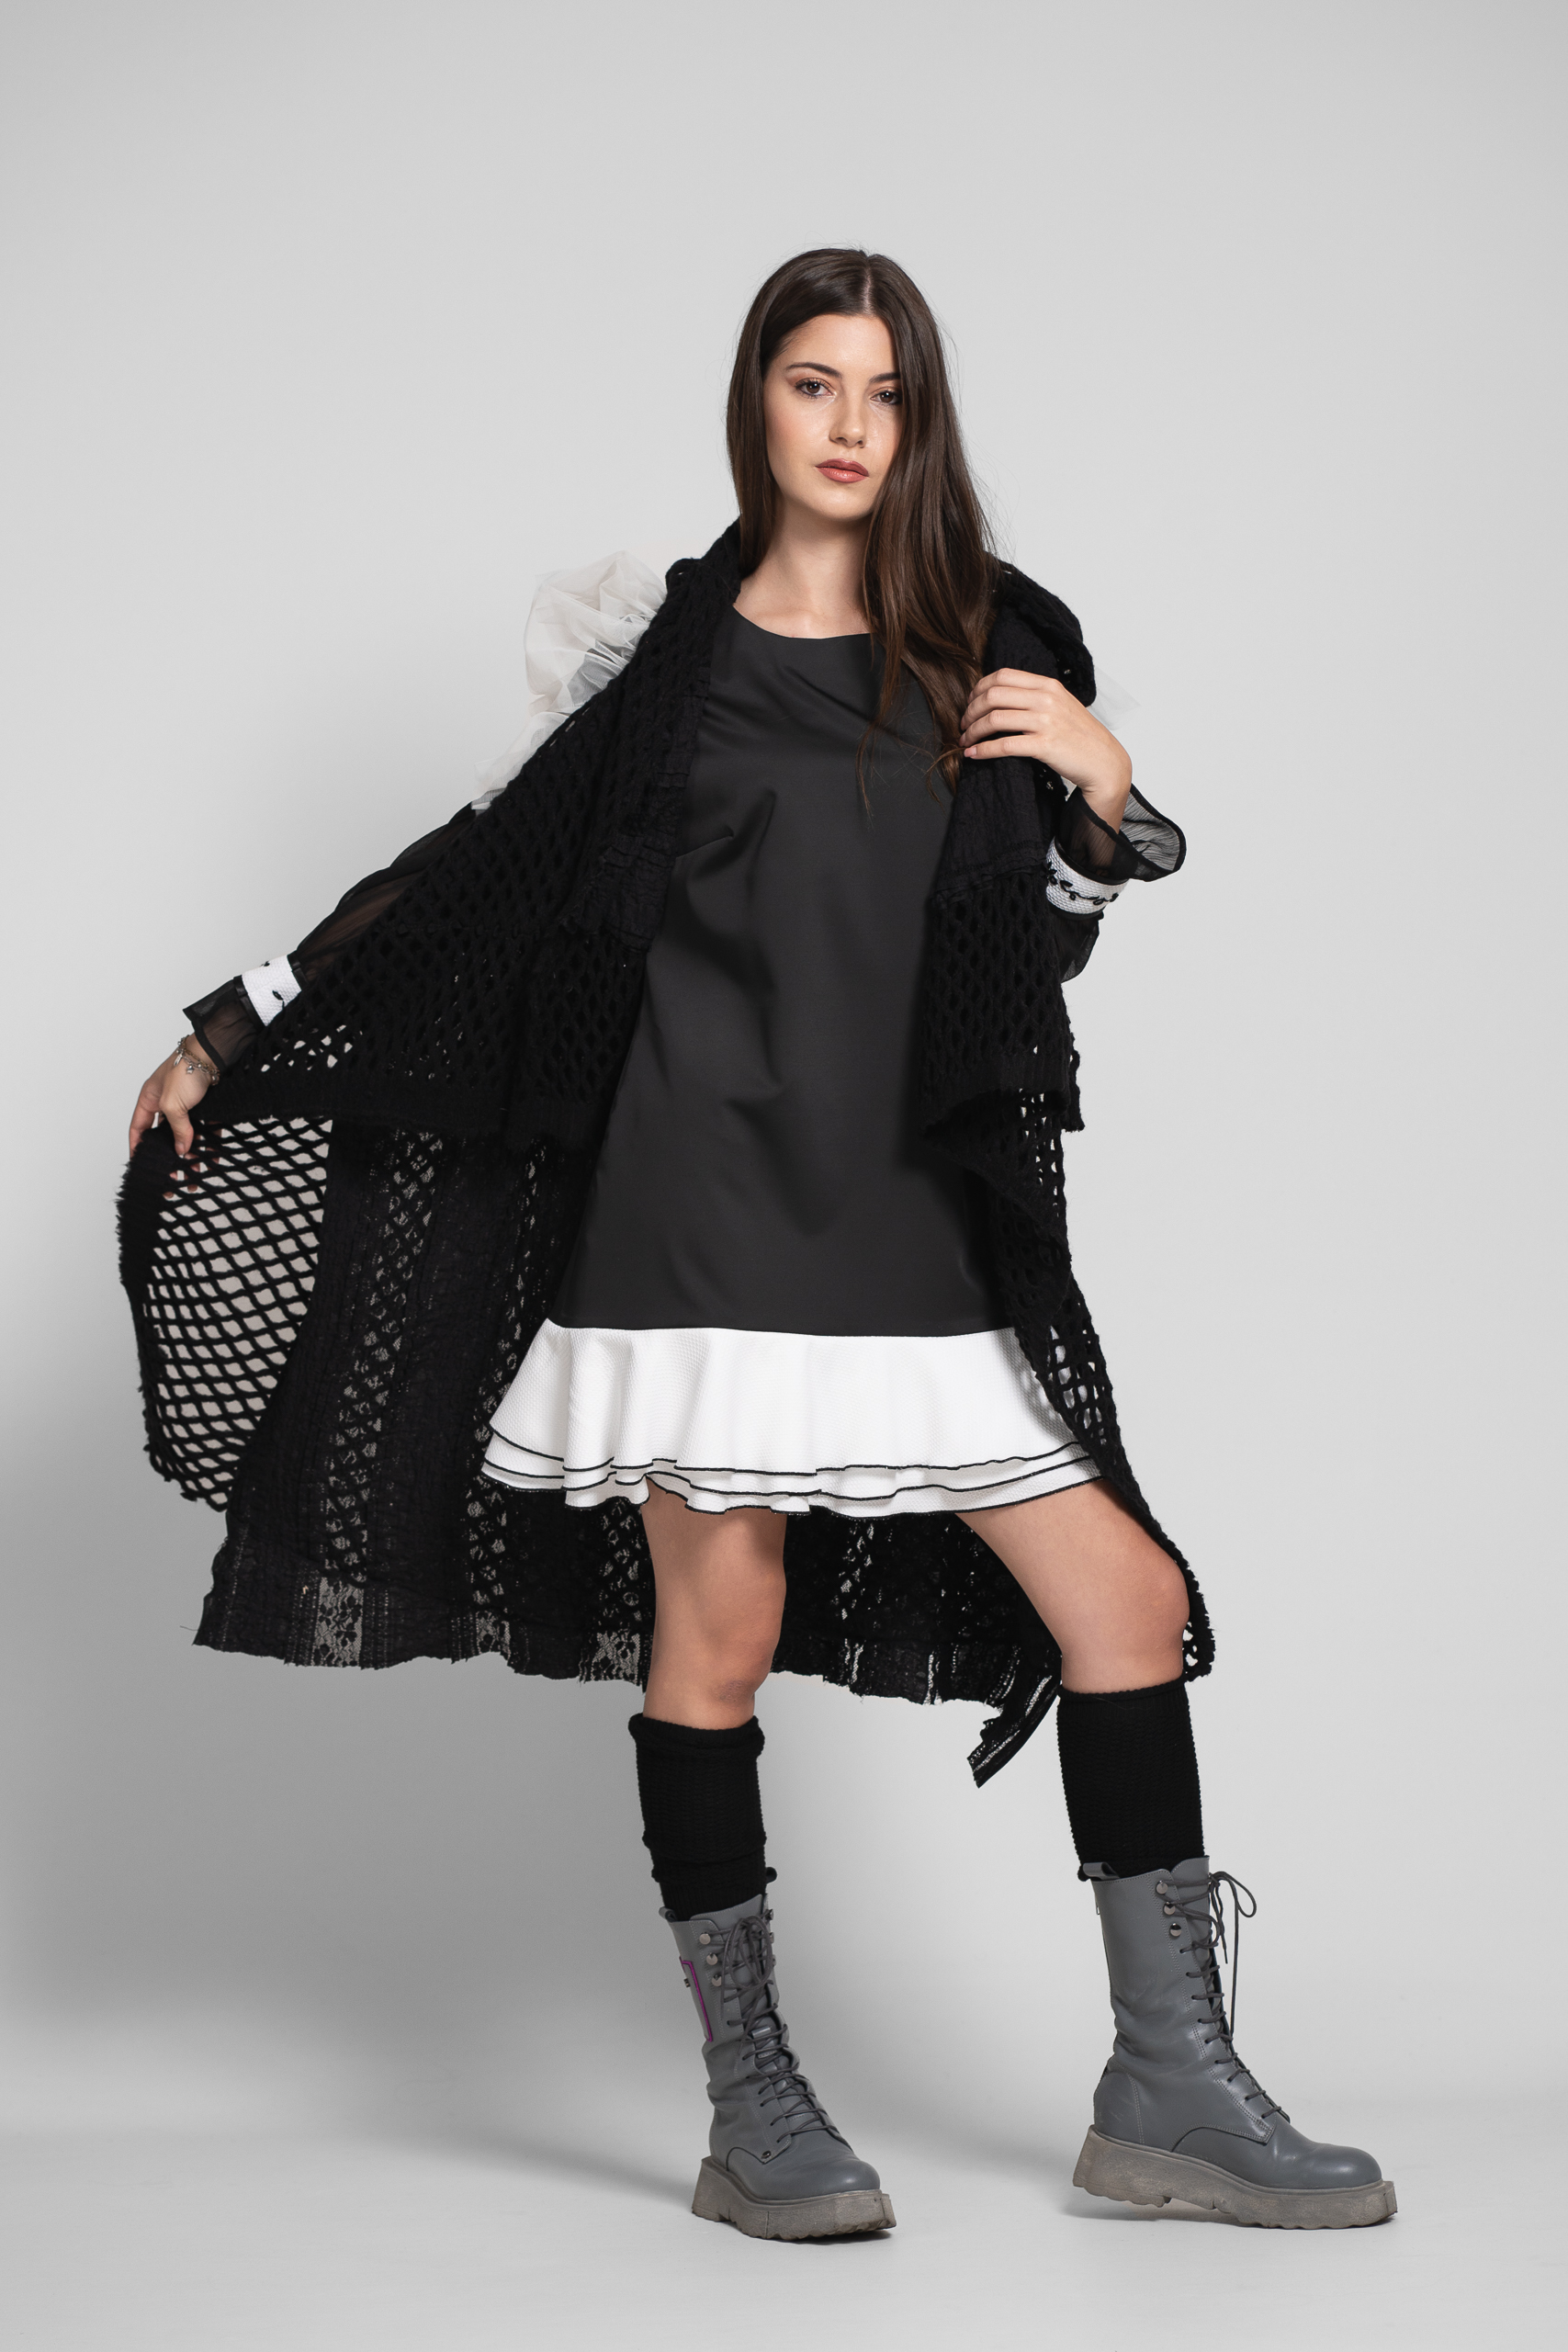 OISO Elegant black statement vest made of wool. Natural fabrics, original design, handmade embroidery